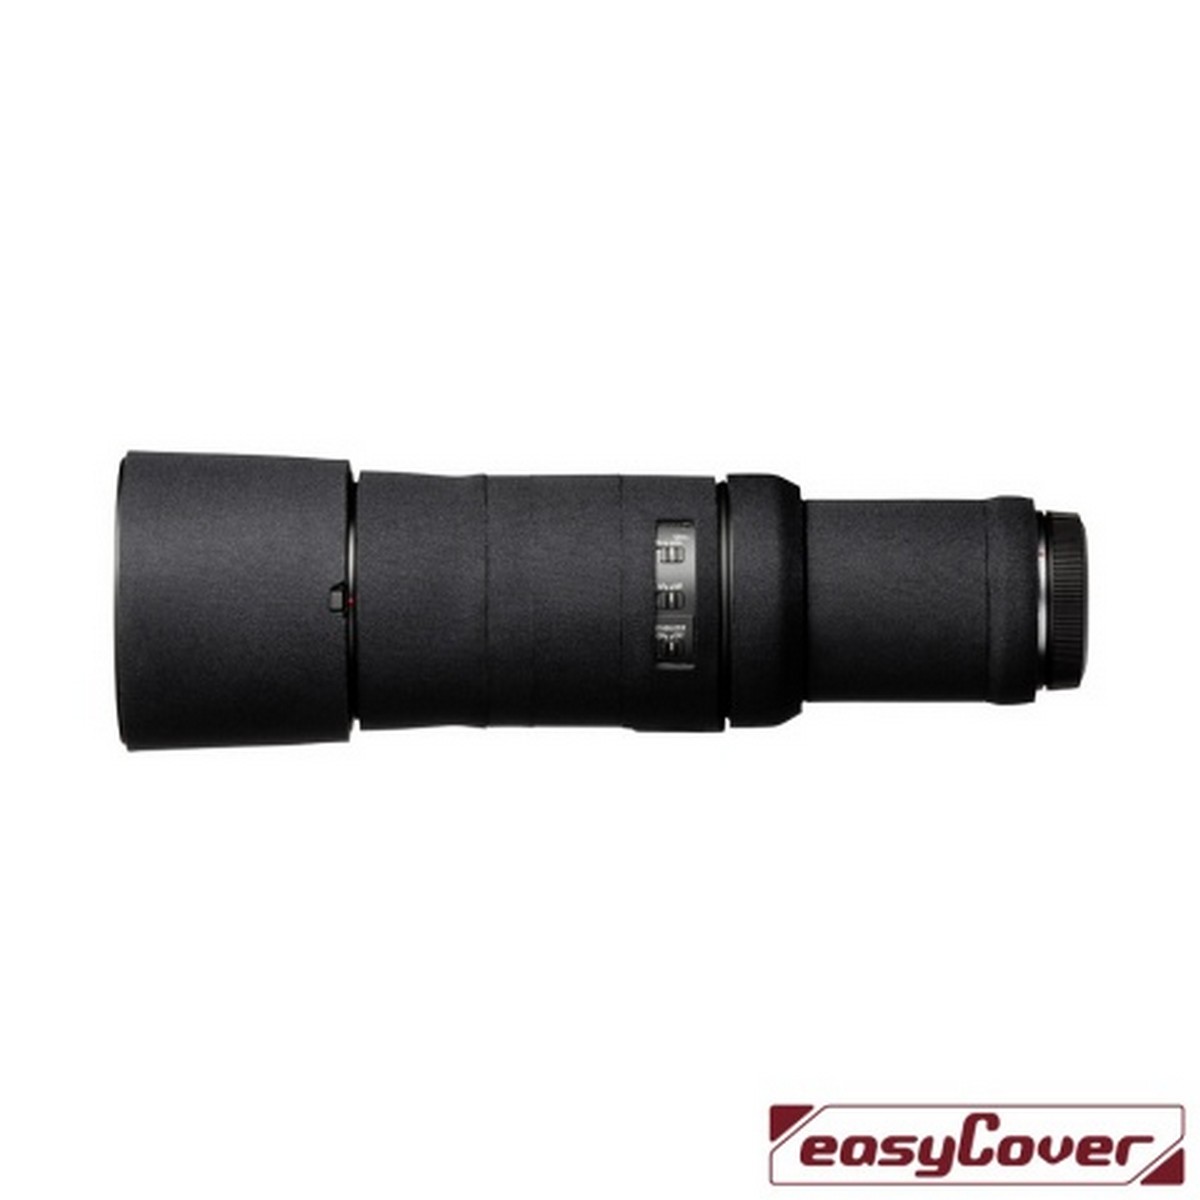 Easycover Lens Oak Objektivschutz für Canon RF 600 mm 1:11 IS STM Schwarz